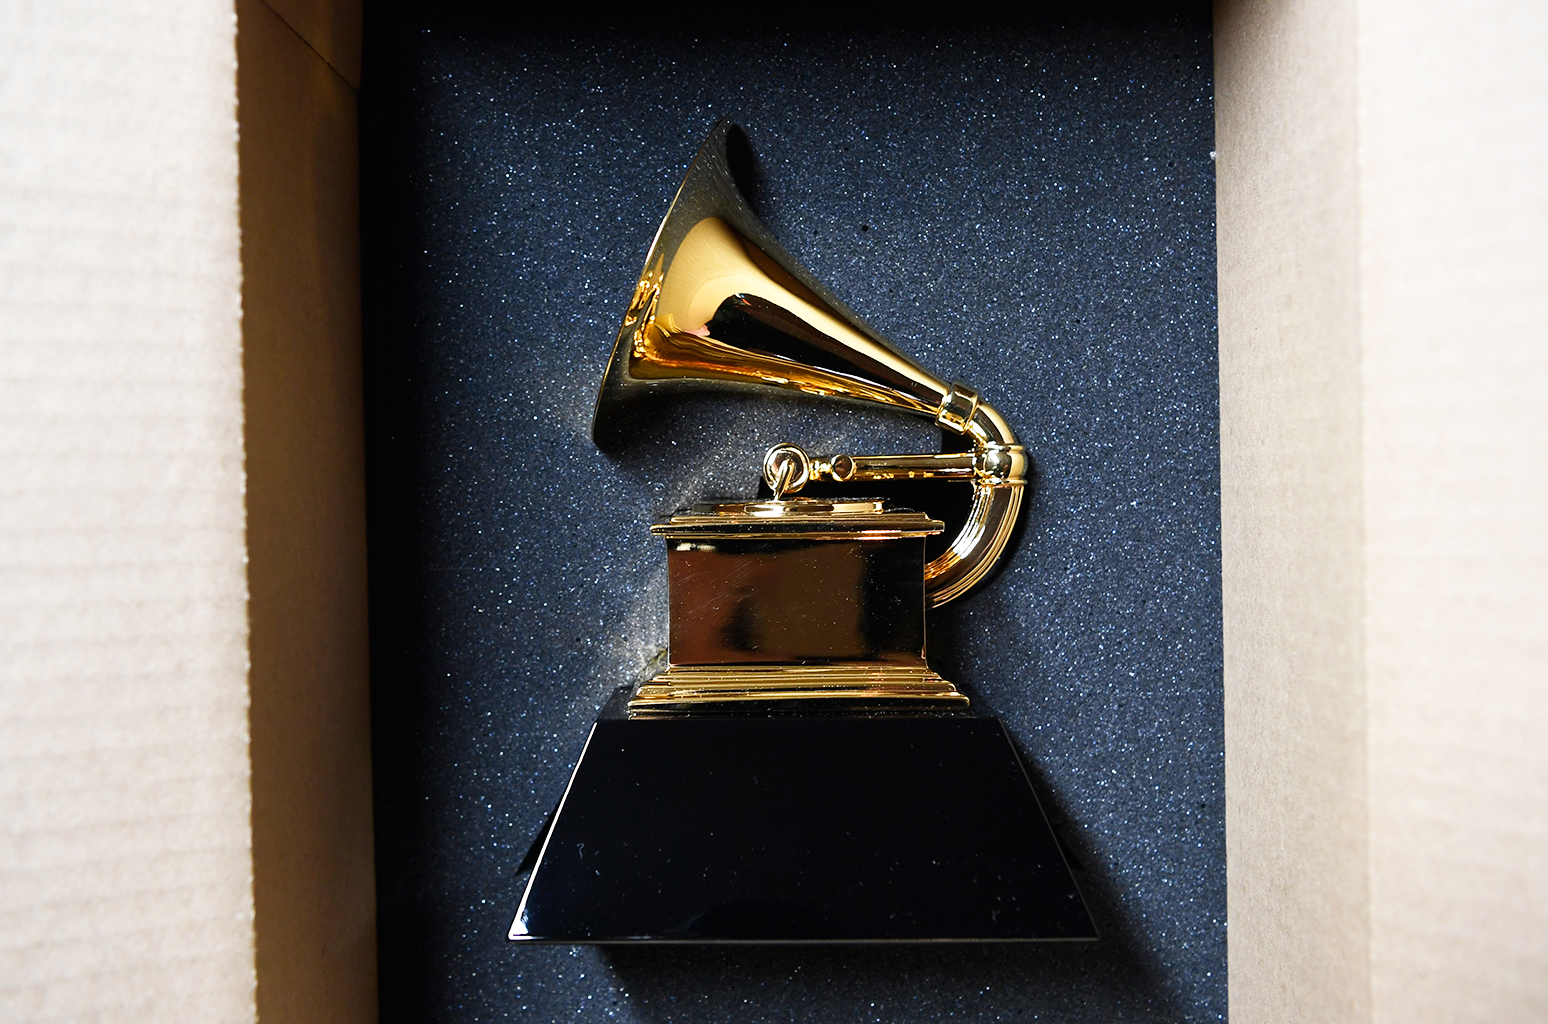 Grammys to Stream Red-Carpet Preshow Exclusively Via Twitter - www.billboard.com